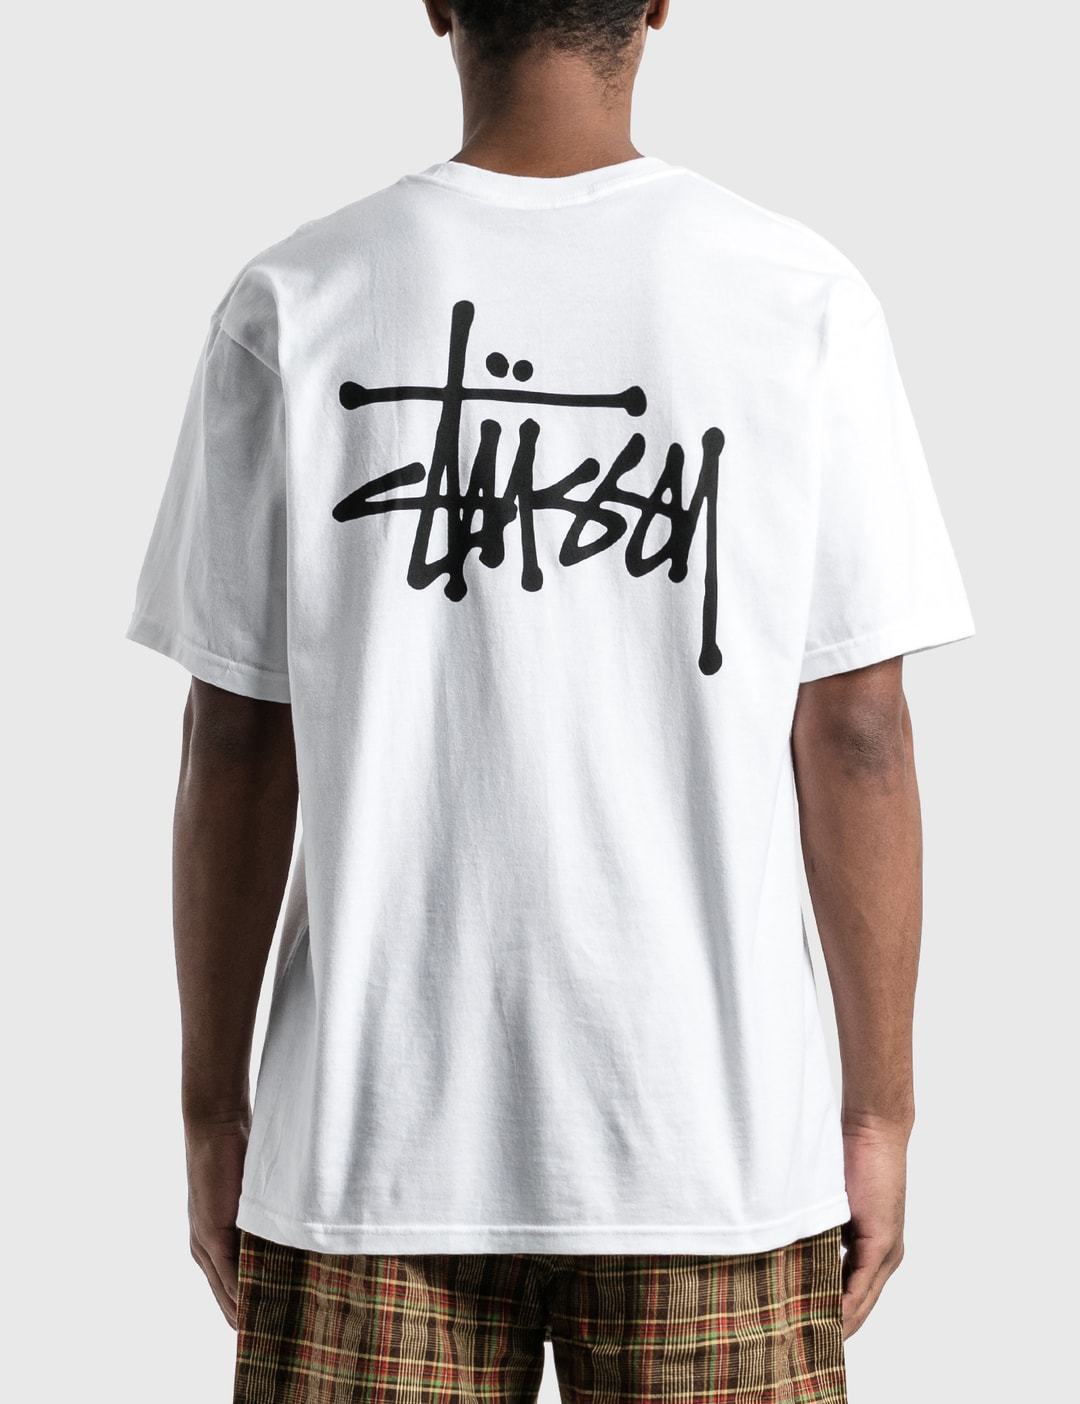 Stüssy - Basic Stussy T-Shirt | HBX - Globally Curated Fashion and ...